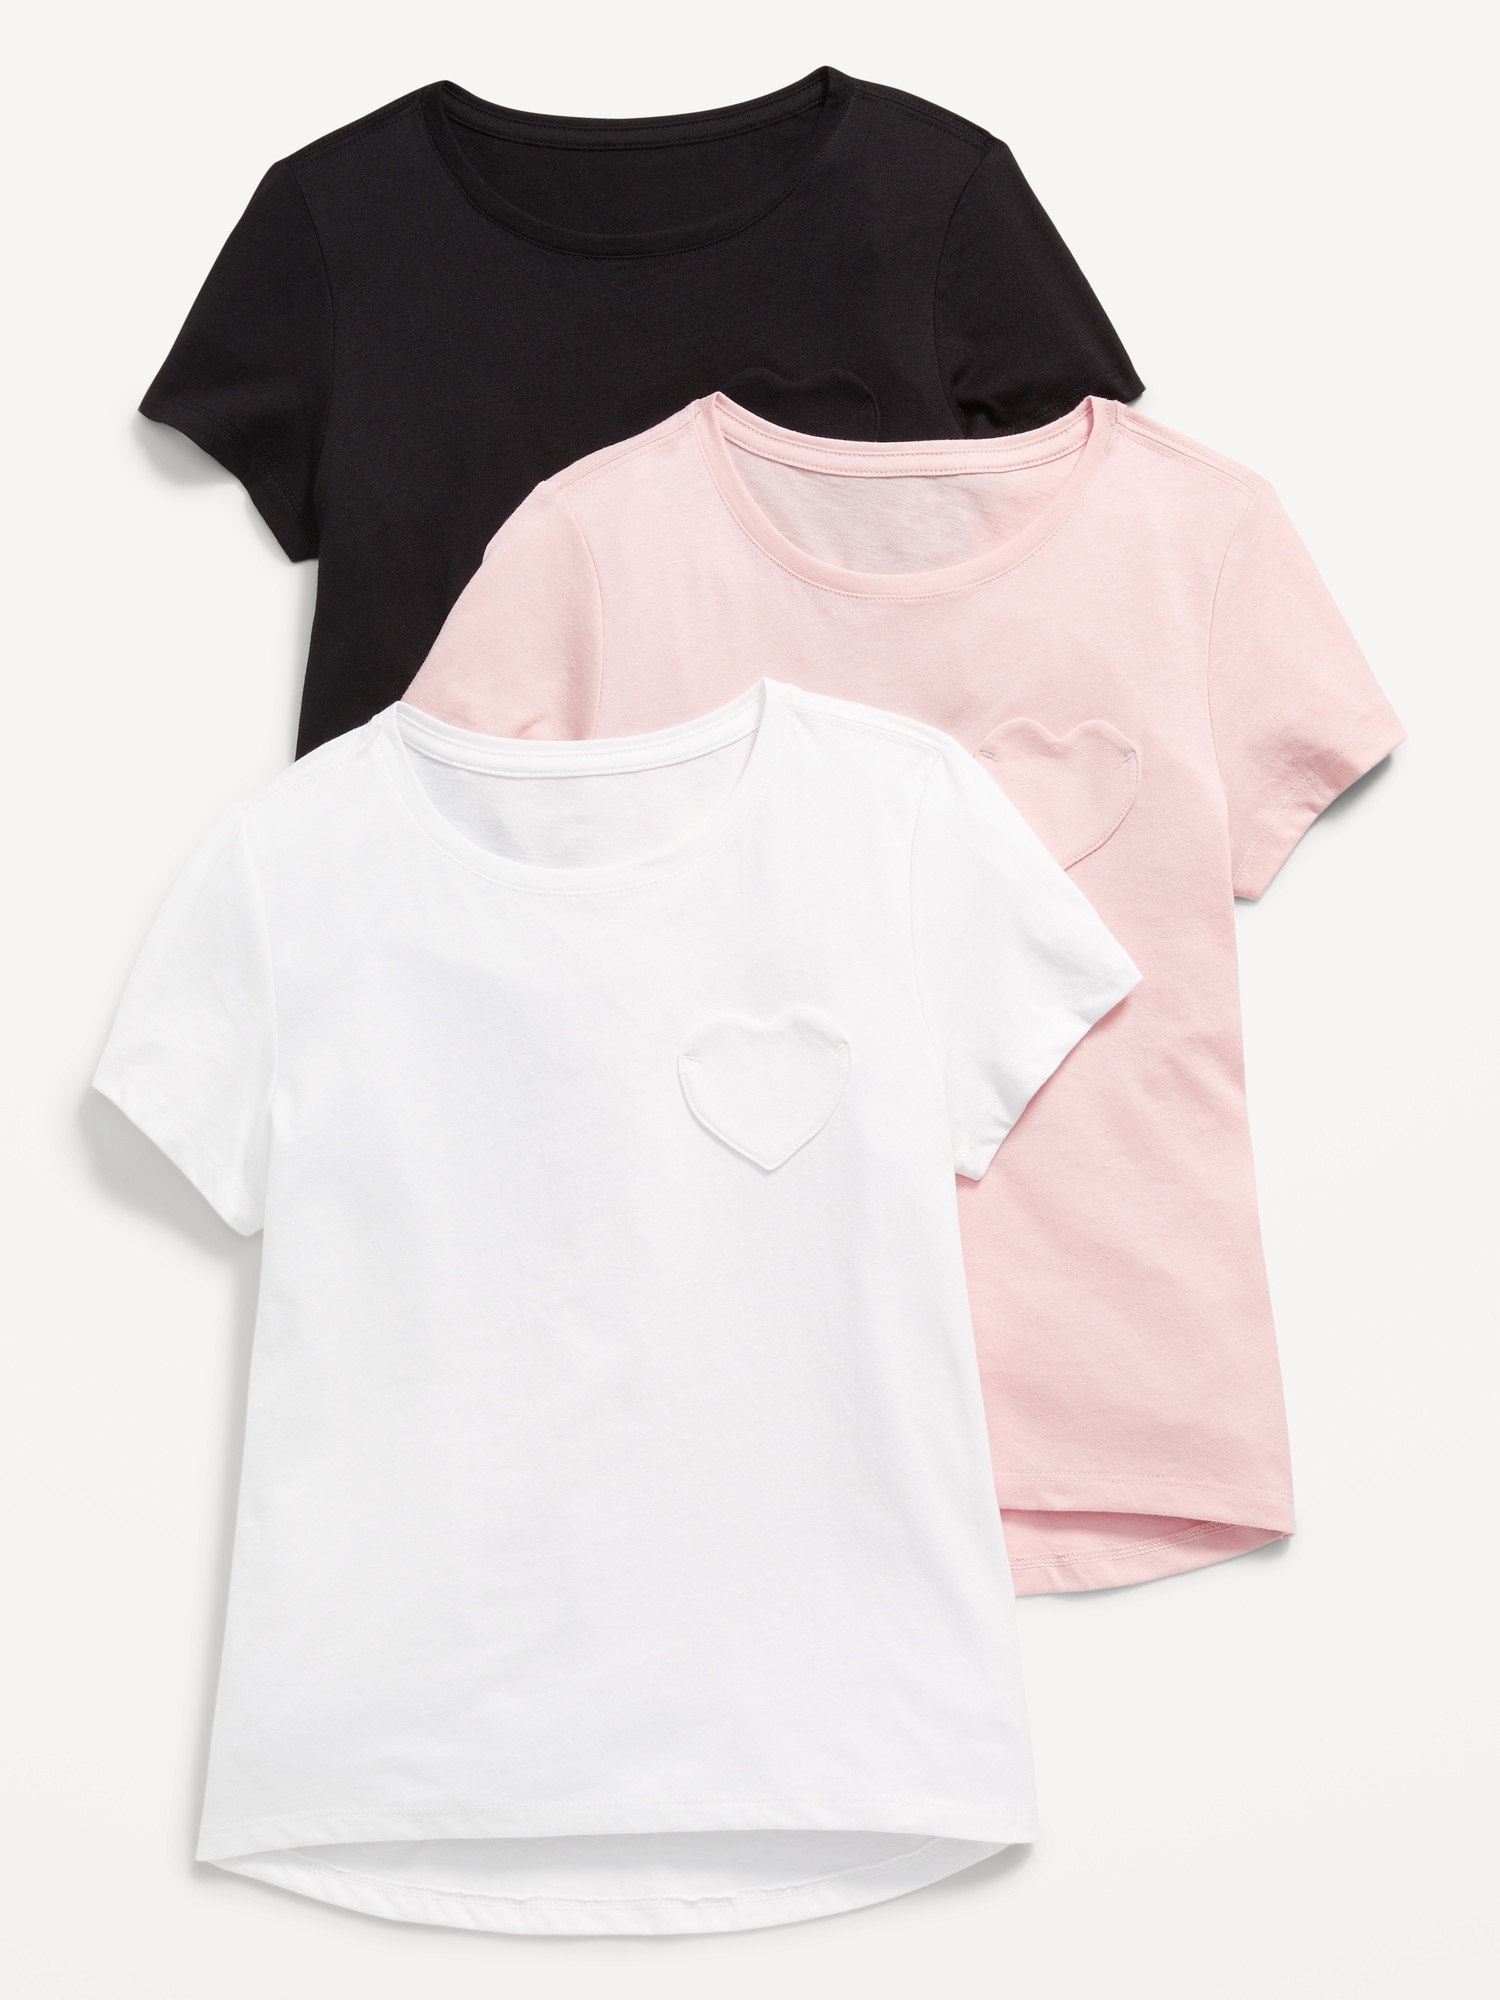 Softest Short-Sleeve Heart Pocket T-Shirt 3-Pack for Girls Hot Deal